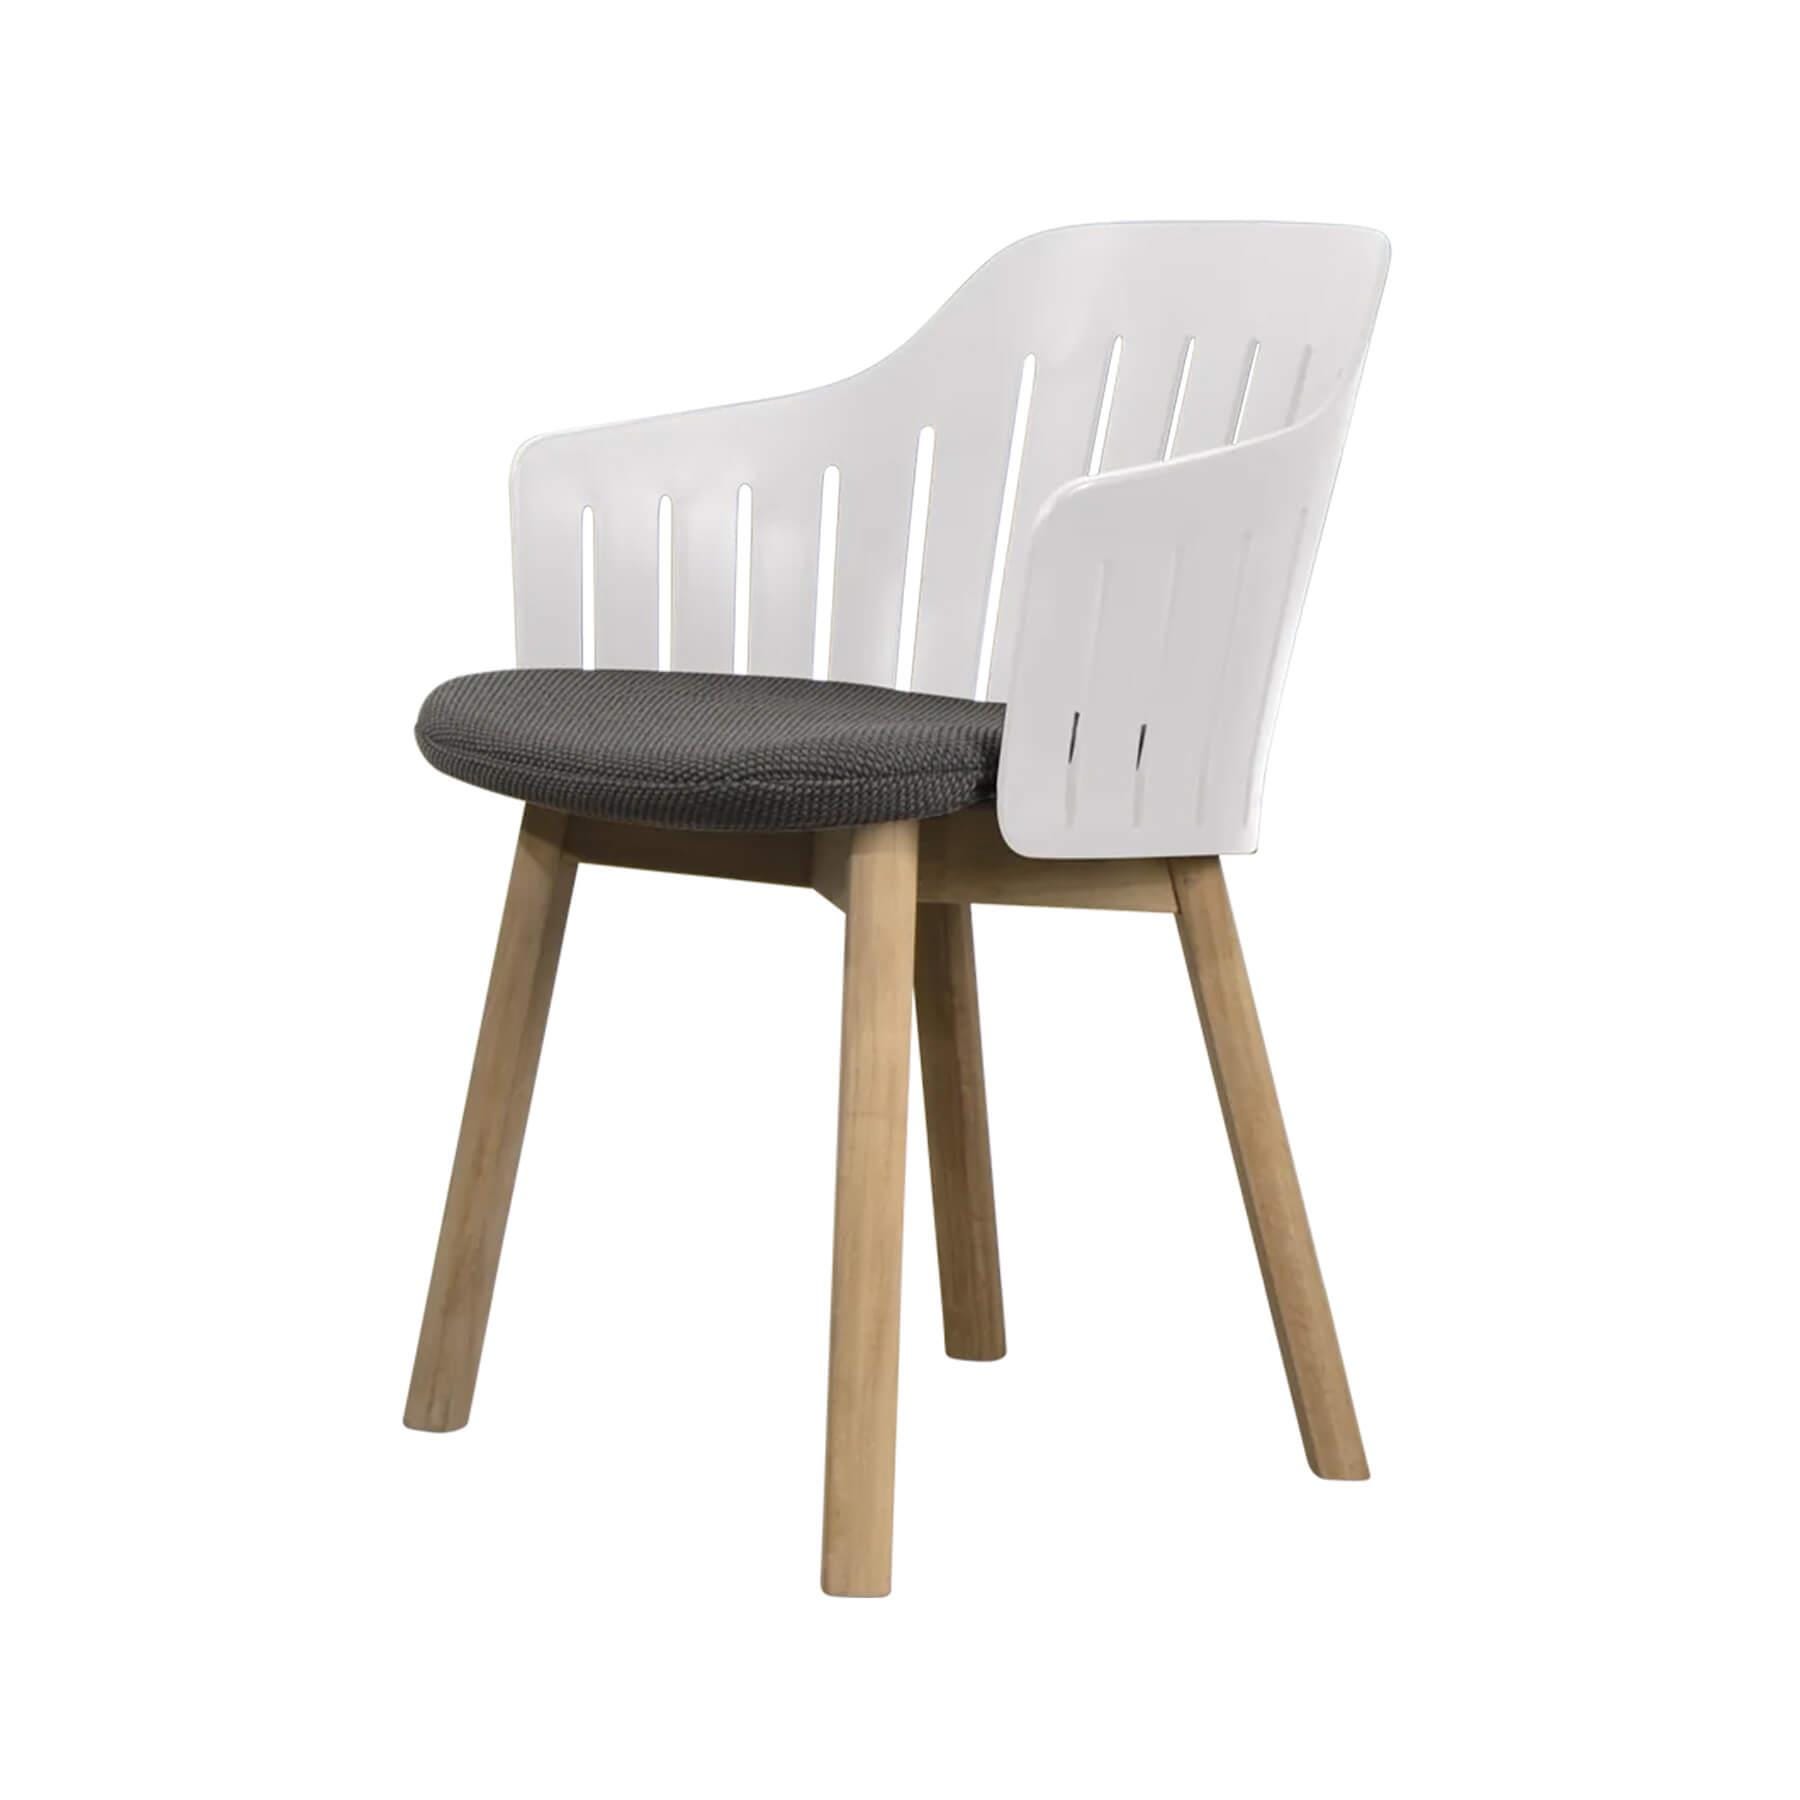 Caneline Choice Outdoor Chair With Teak Legs White Seat Dark Grey Cushion